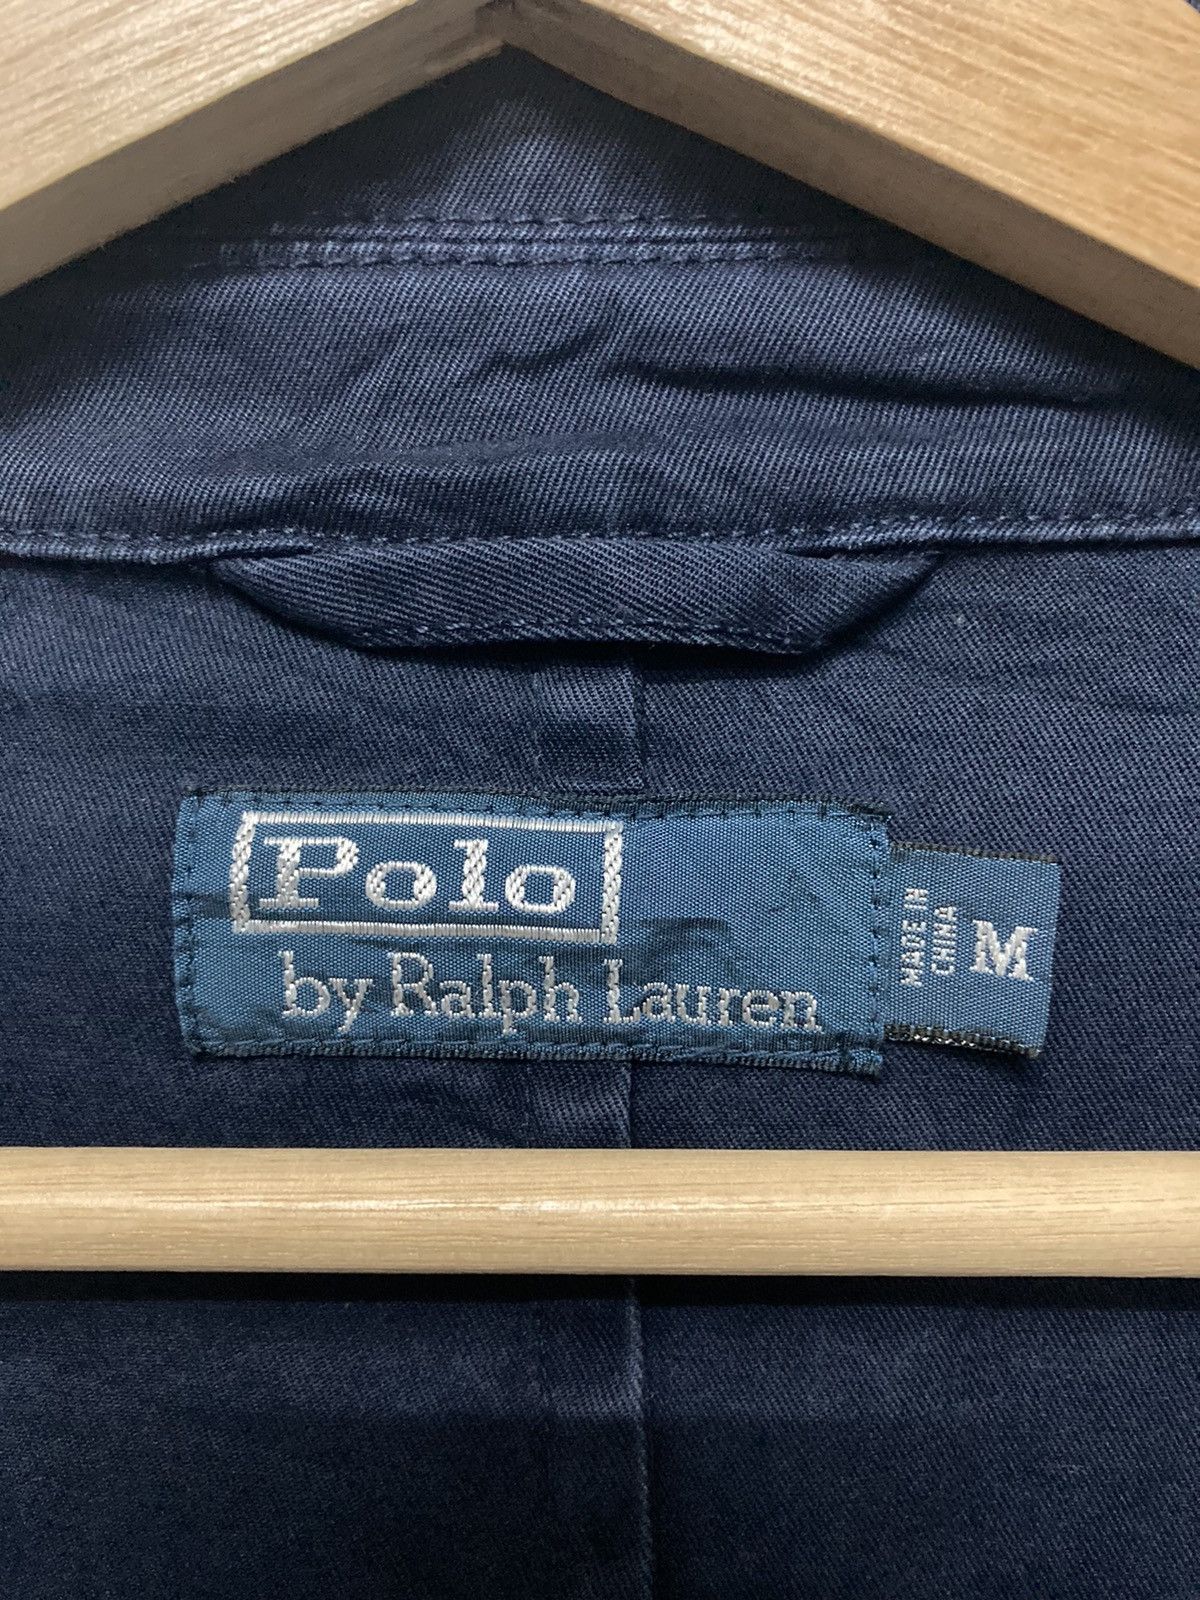 Polo Ralph Lauren Yacht Blazer Jacket - 18